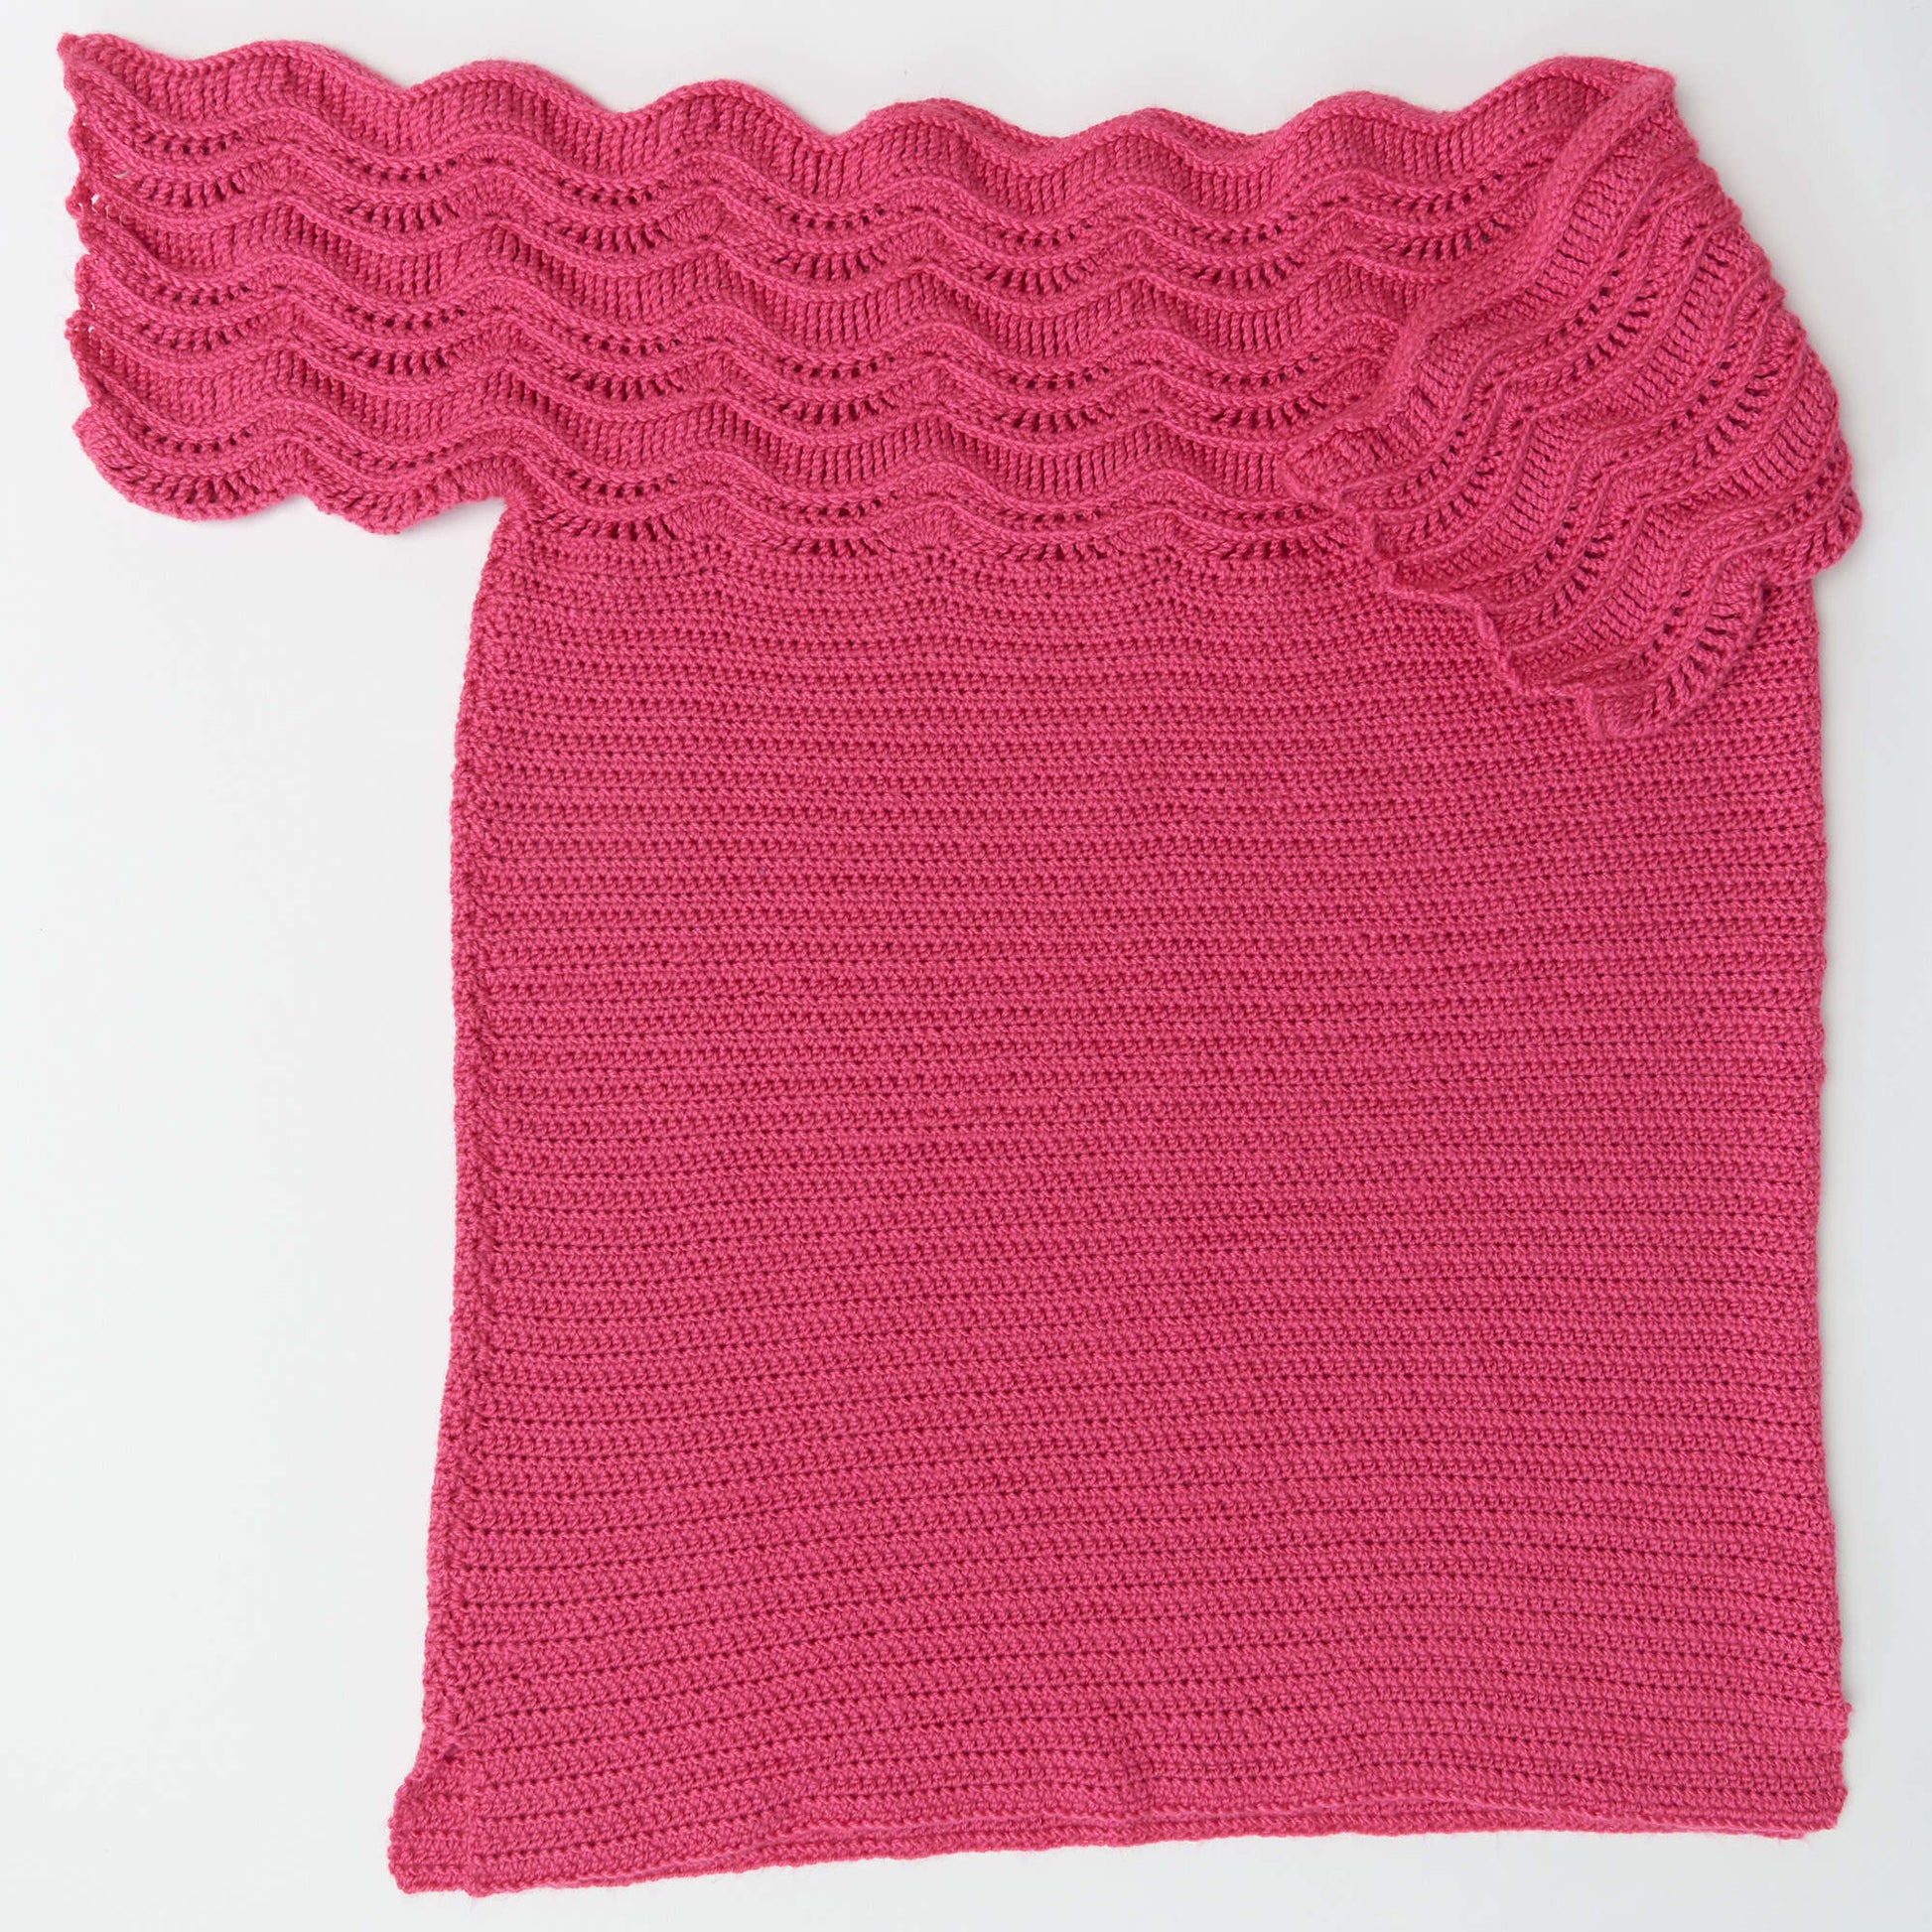 Free Red Heart Comfy Crochet Sweater Pattern